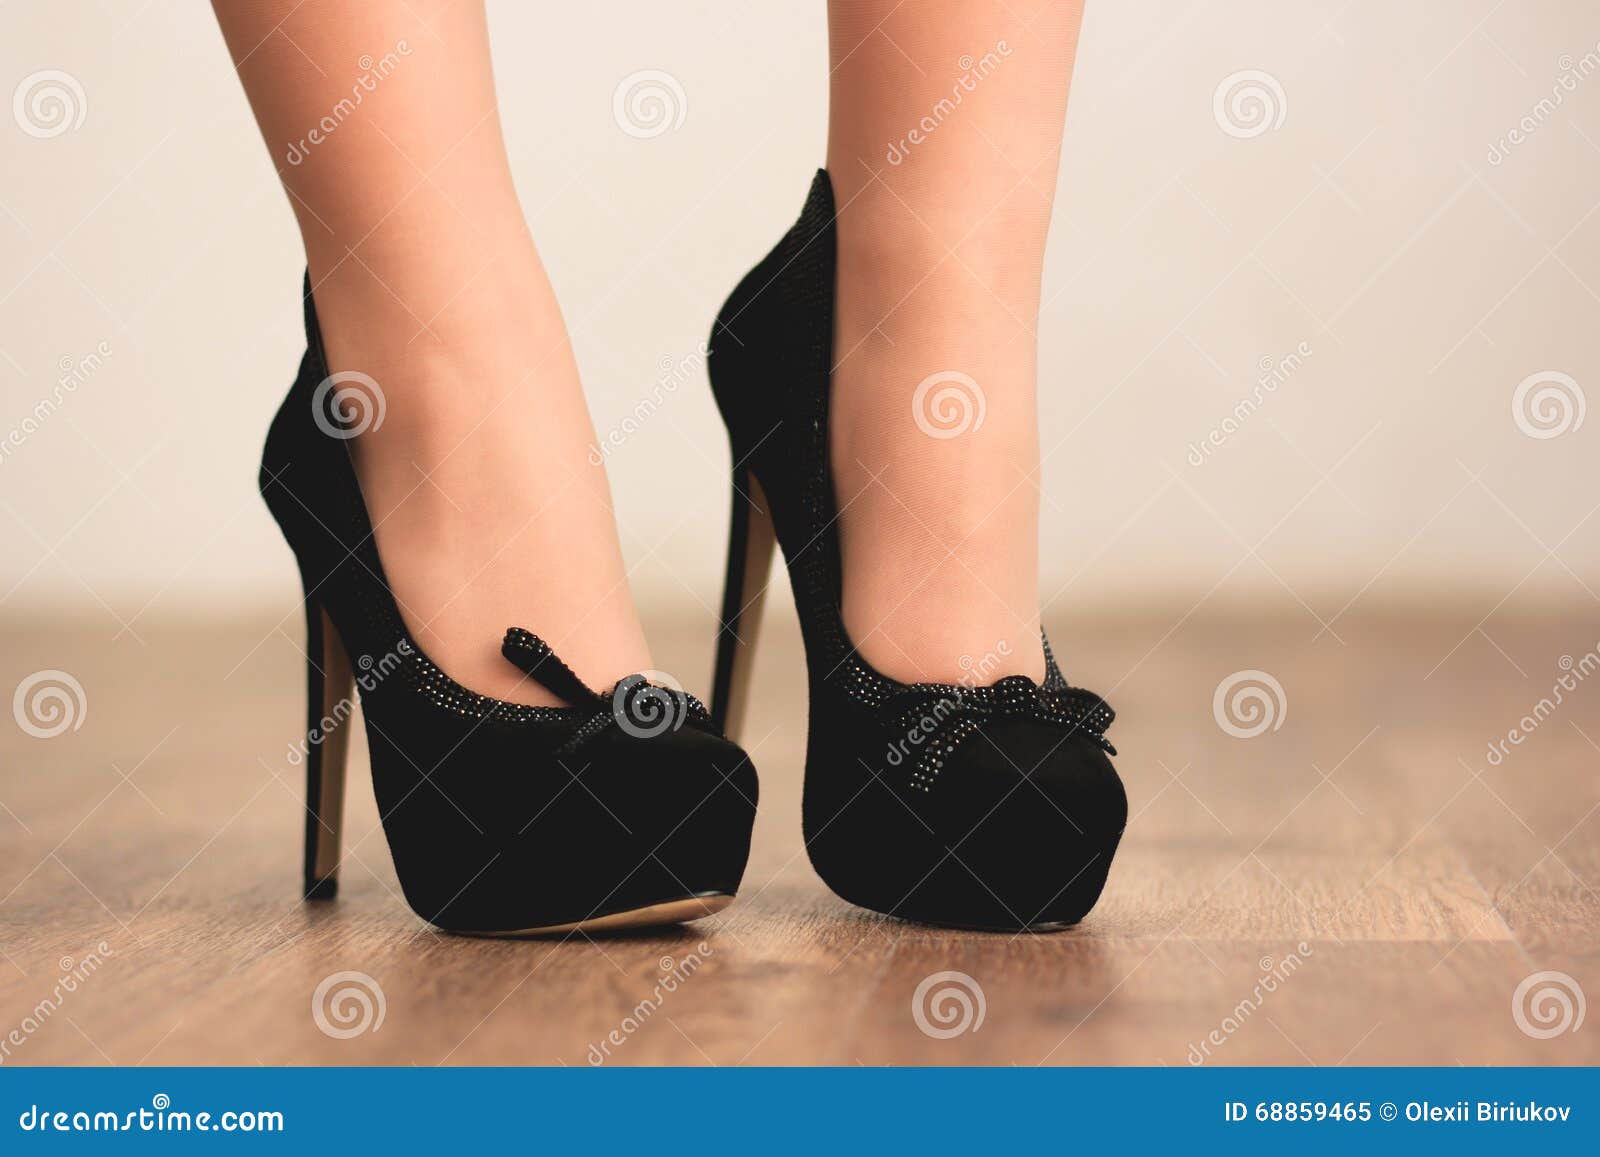 Buy Women's Stilettos High Heel Pumps Chic Classic Party Wedding Office  Slip On Dress Pumps (Peach, 2) at Amazon.in